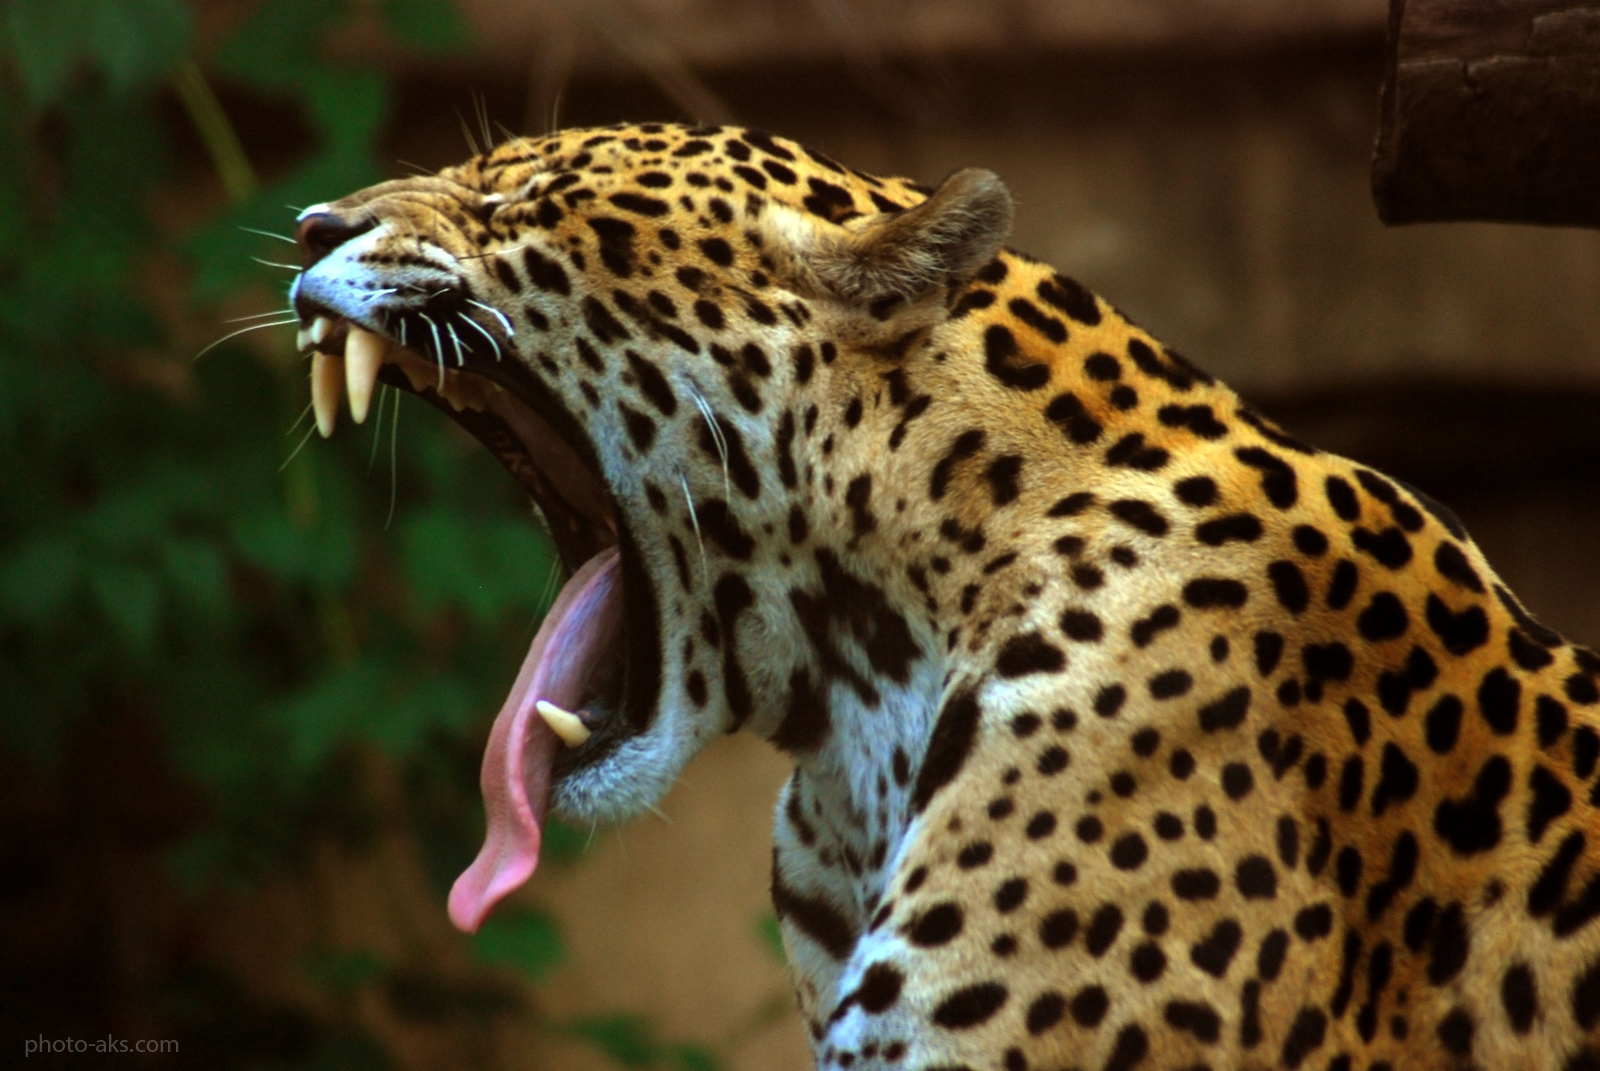 http://pic.photo-aks.com/photo/animals/cat/panther/large/jaguar_at_the_zoo.jpg